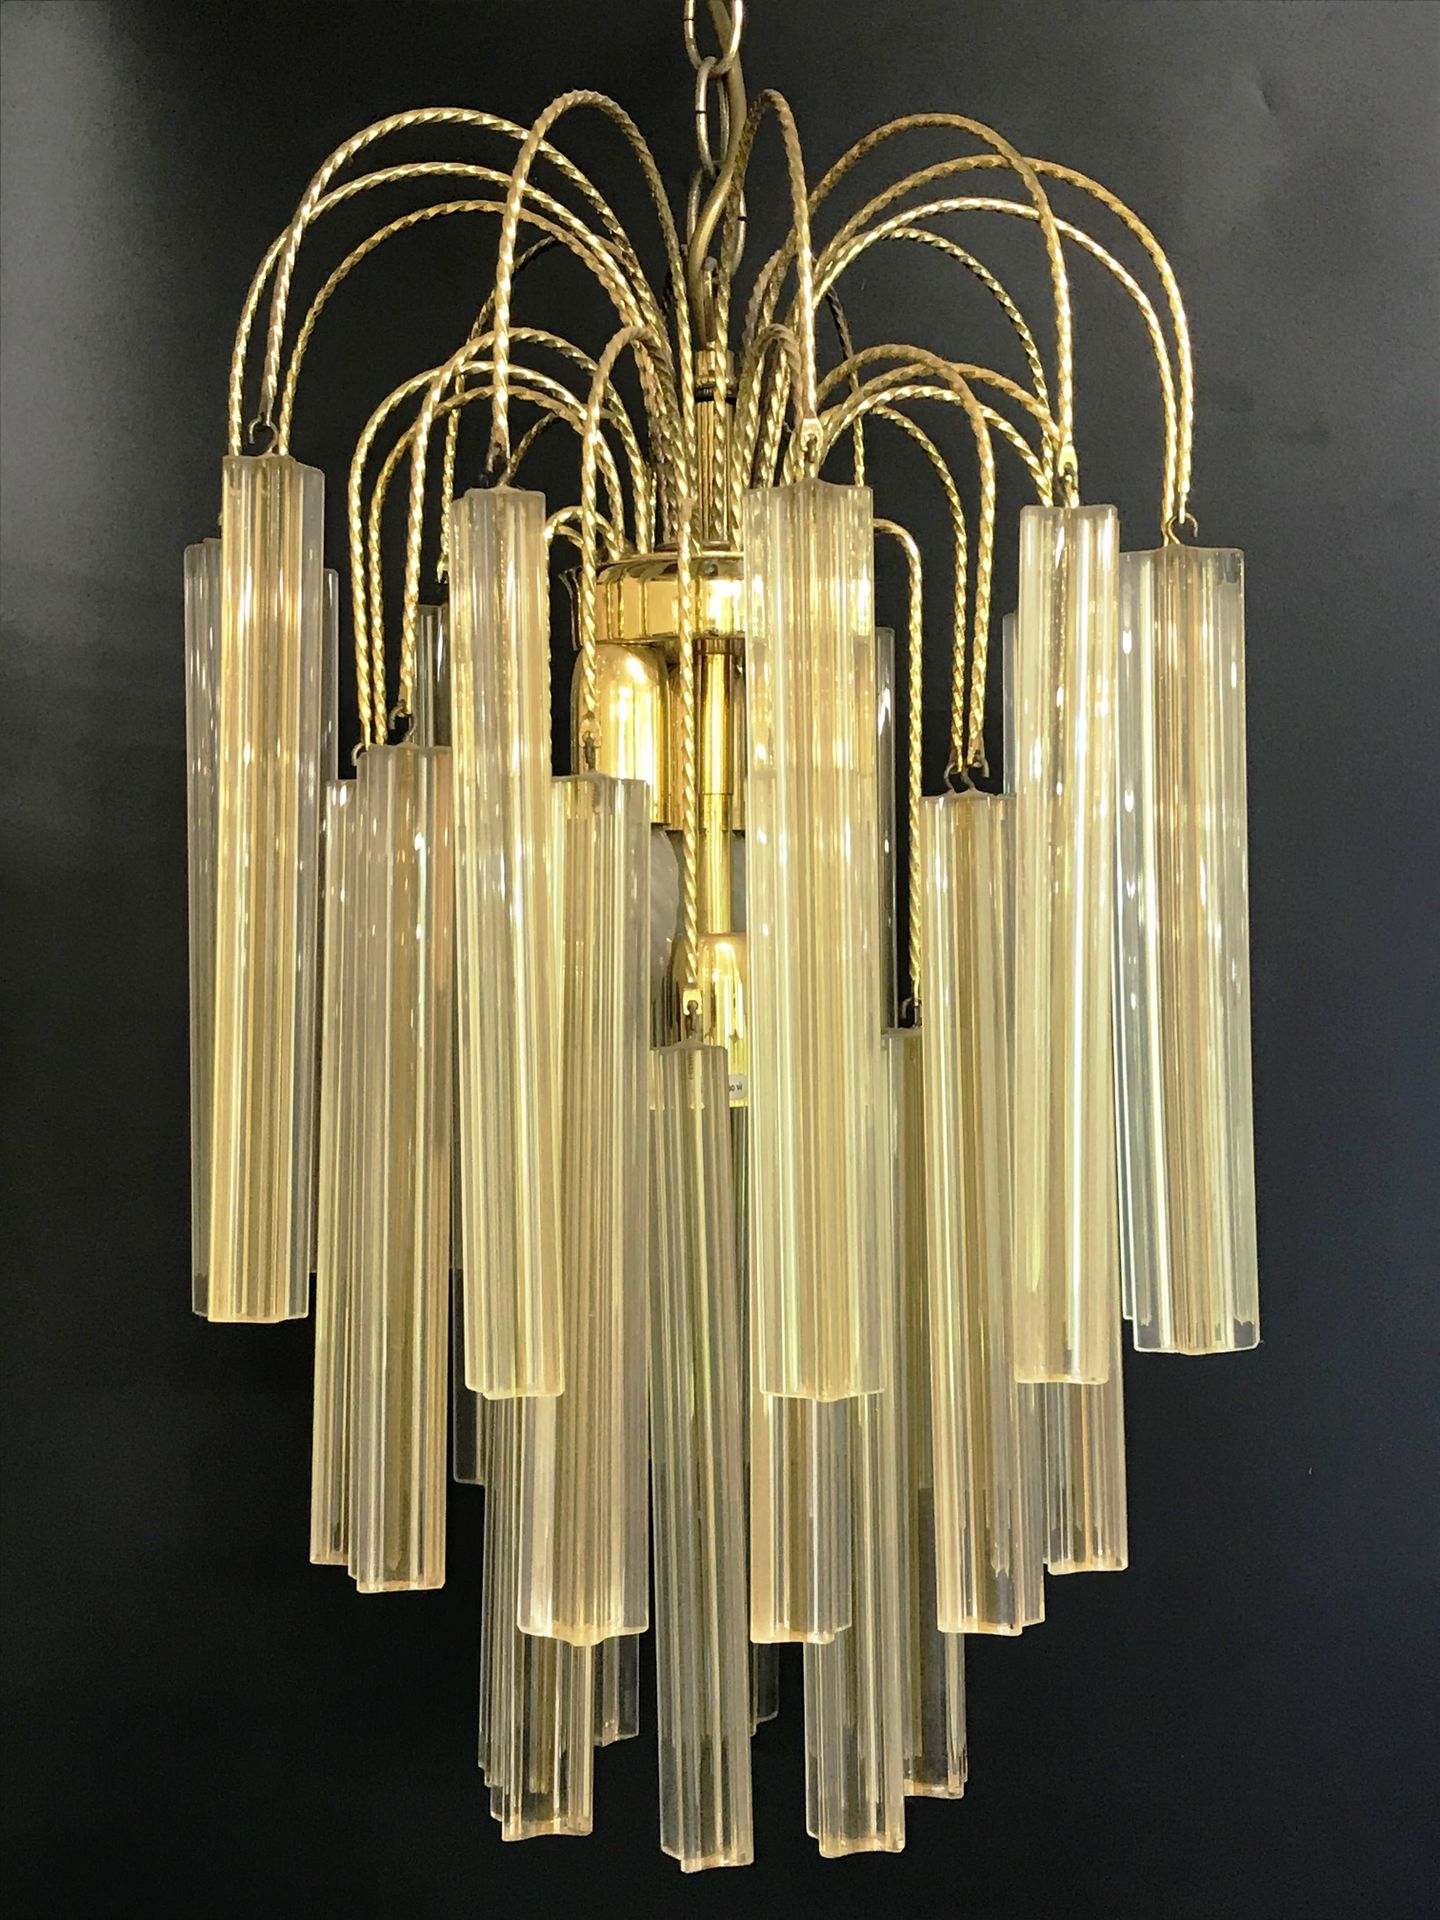 Null 维尼-穆拉诺

穆拉诺玻璃和镀金黄铜吊灯

BE

约1960年

H.78厘米